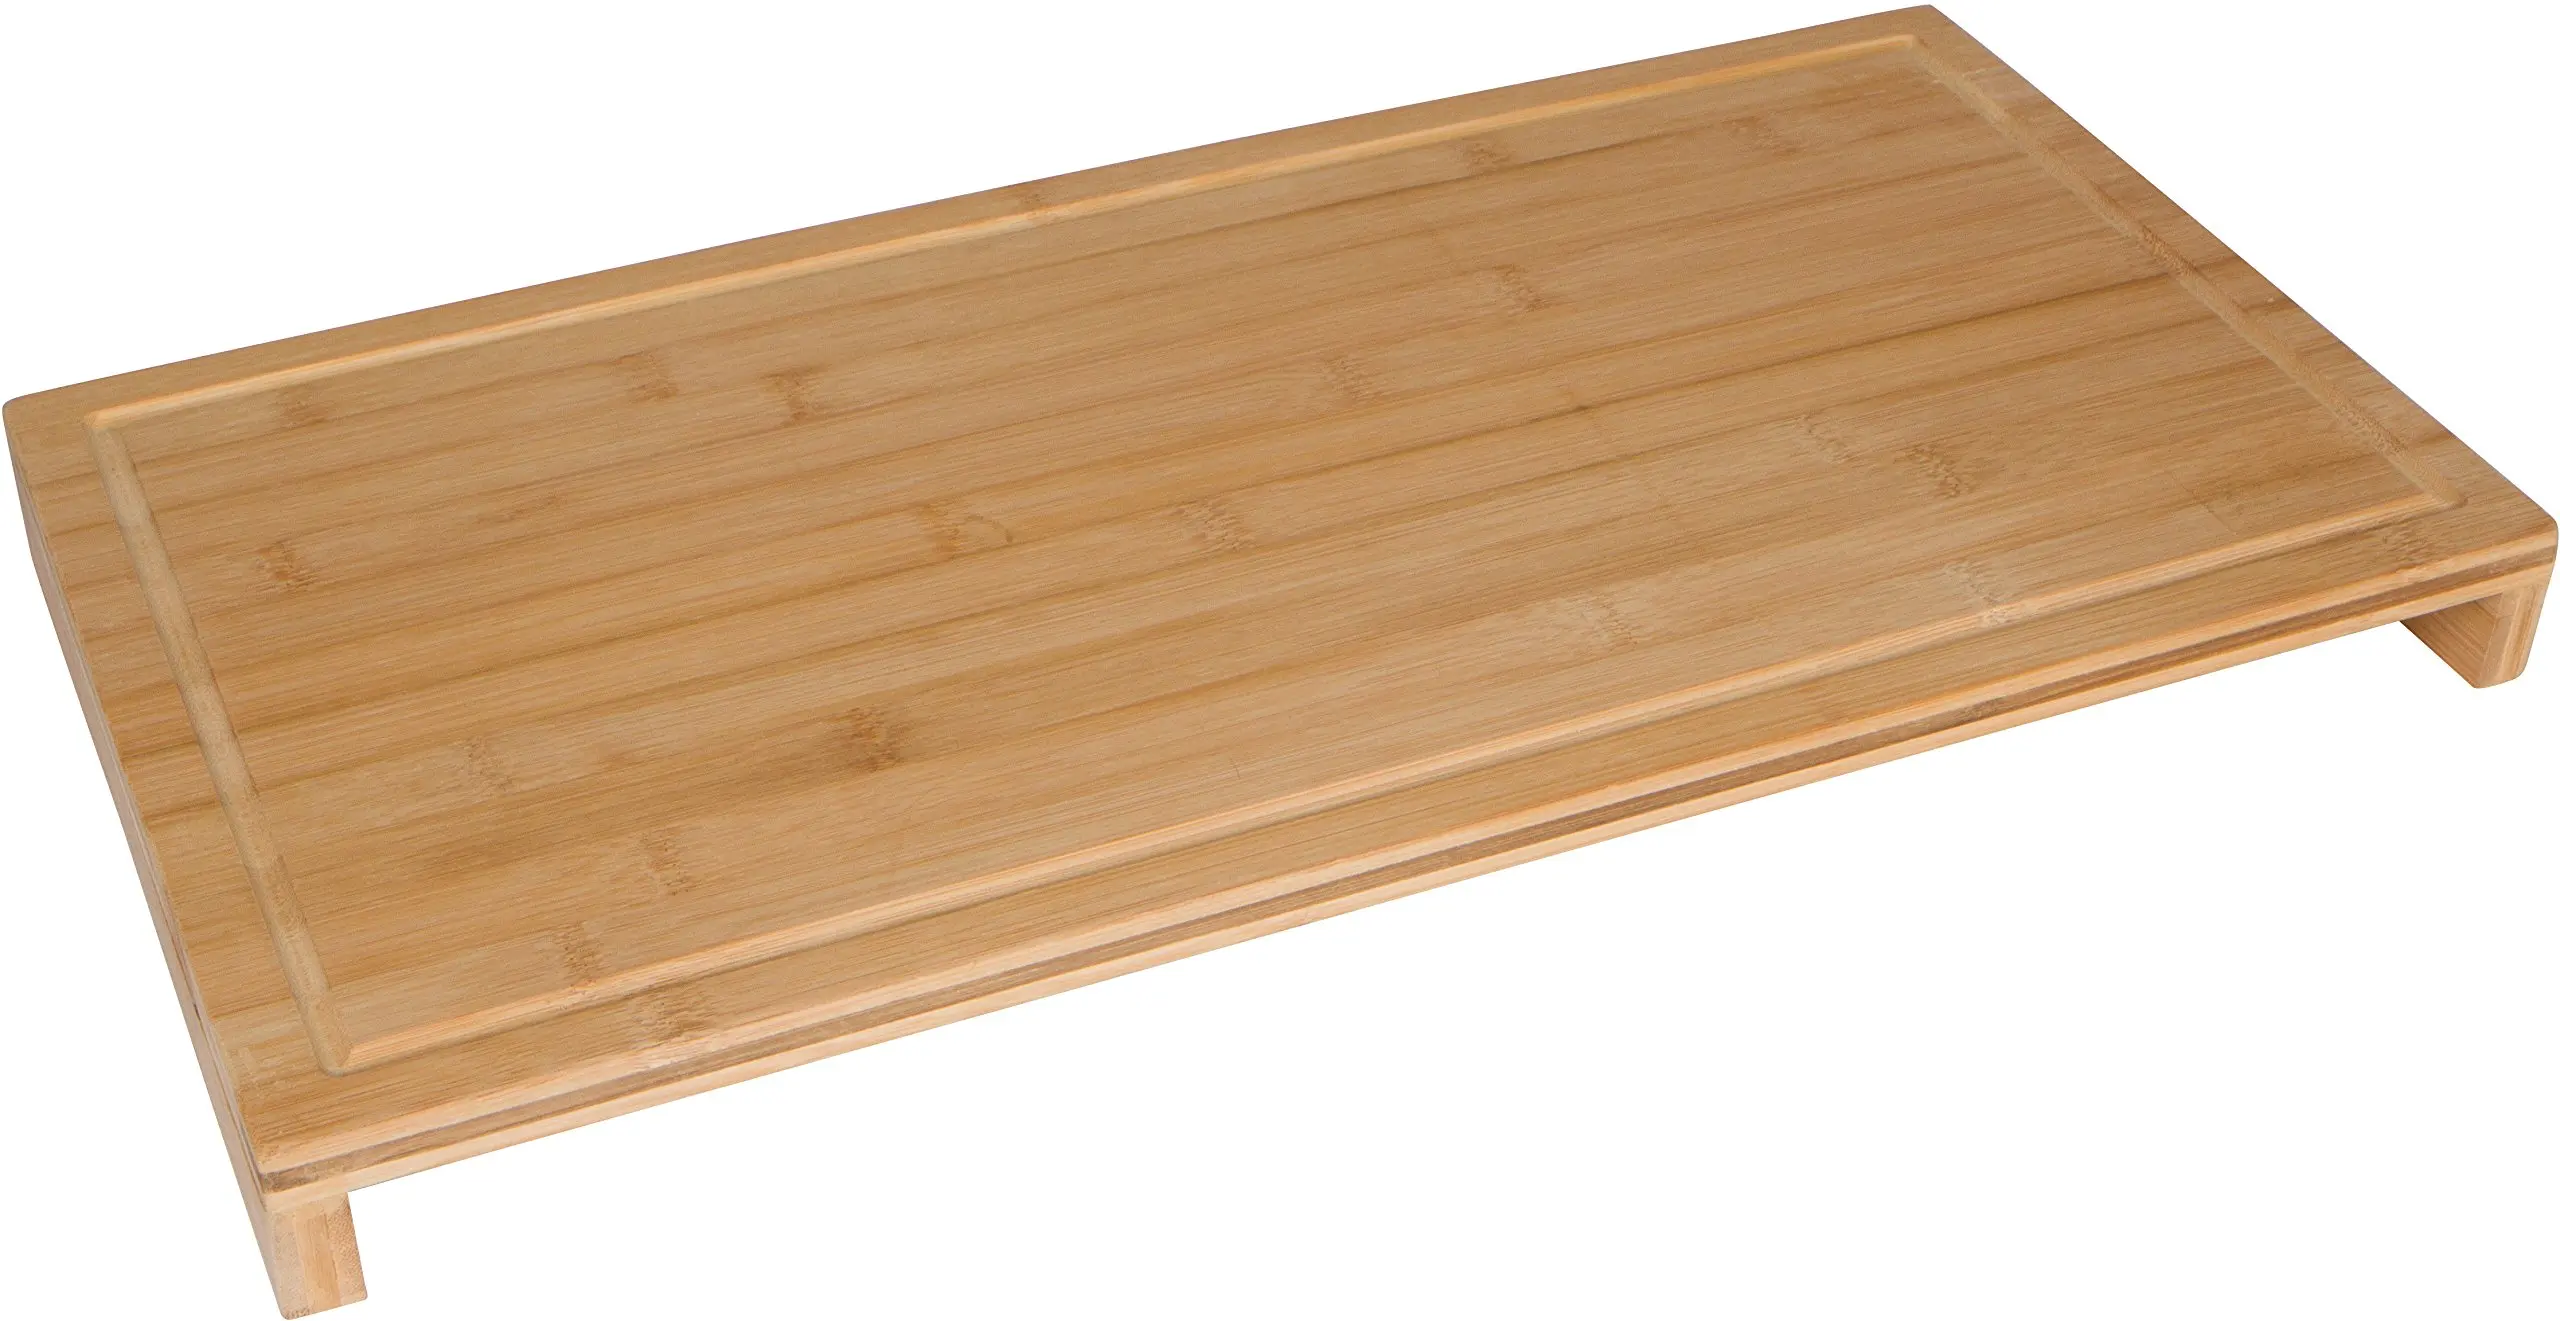 Cheap Stove Top Cutting Board Find Stove Top Cutting Board